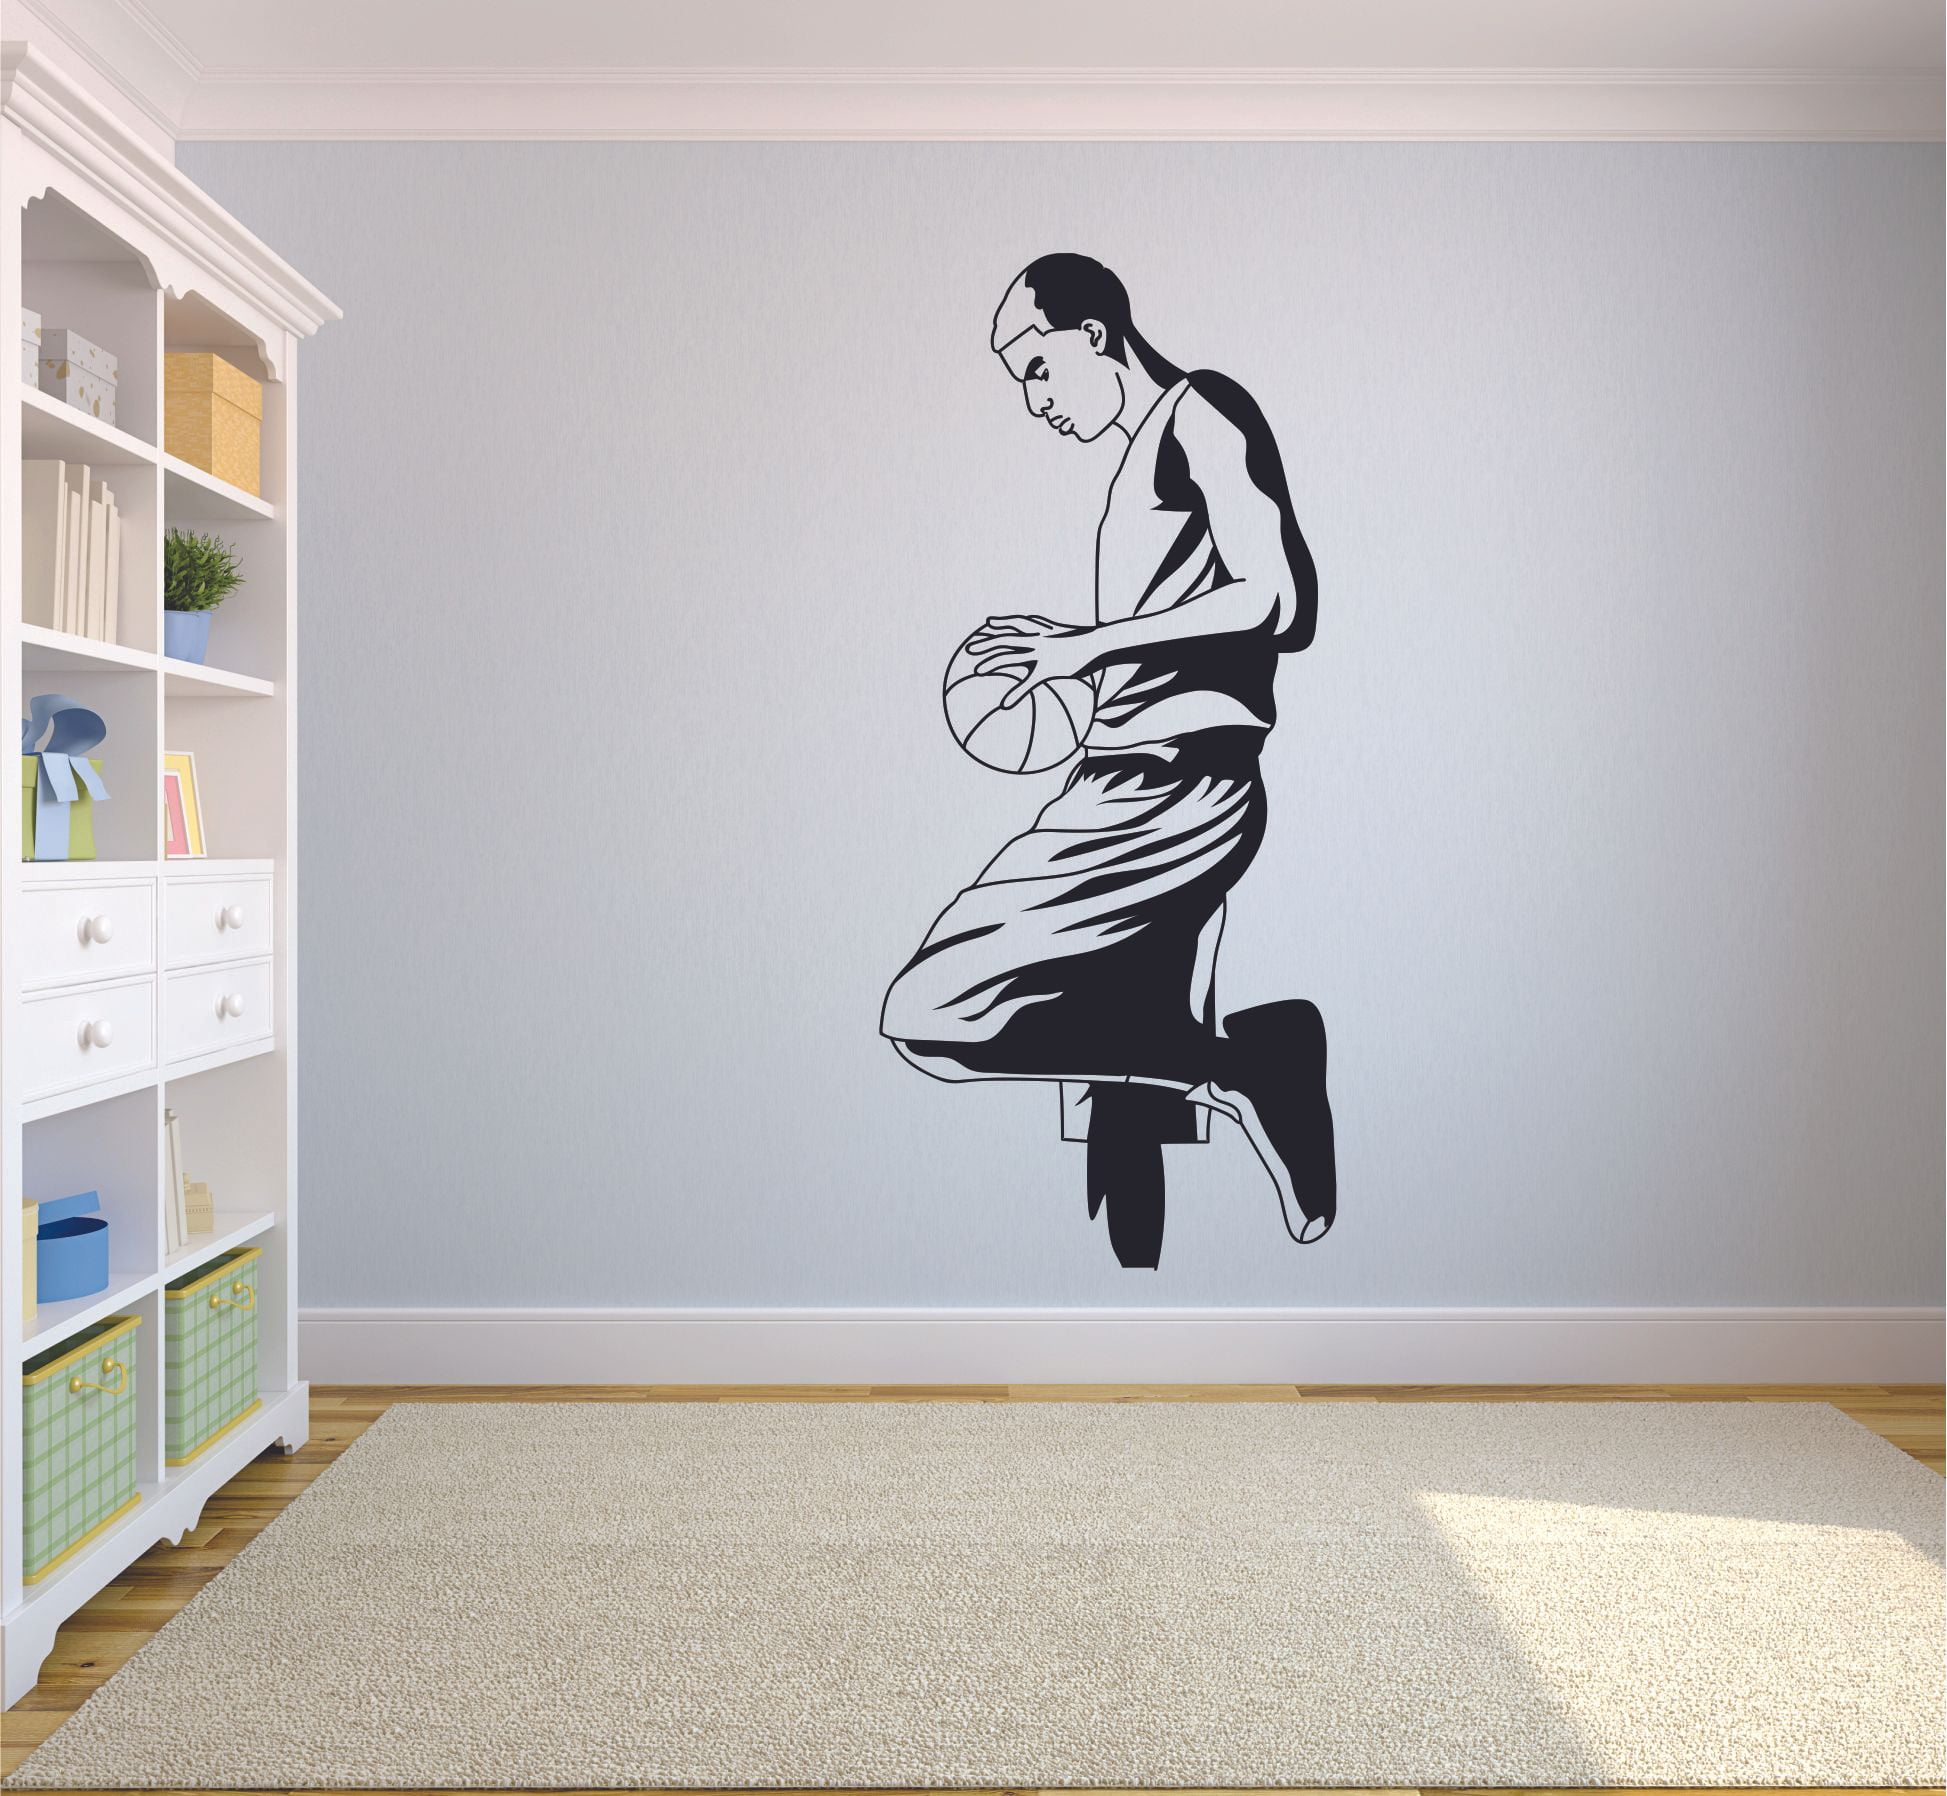 42" x 30" Basketball sticker,wall vinyl Basketball player silhouette